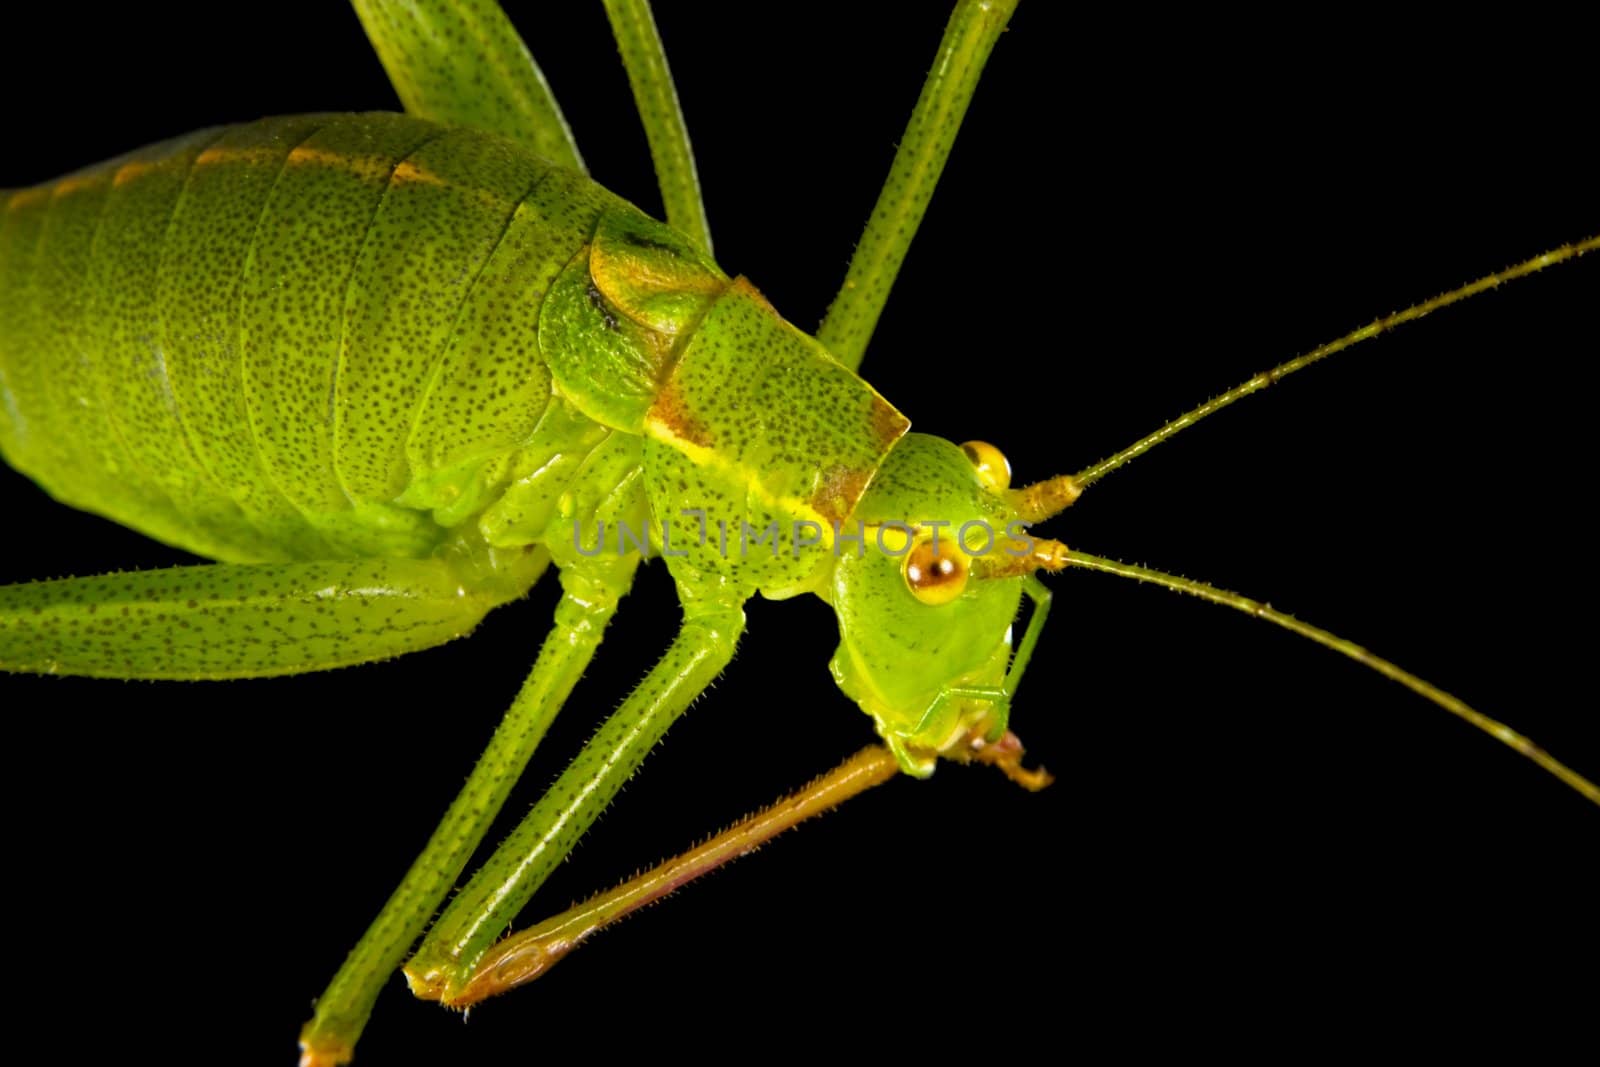 Grasshopper 2 by gewoldi